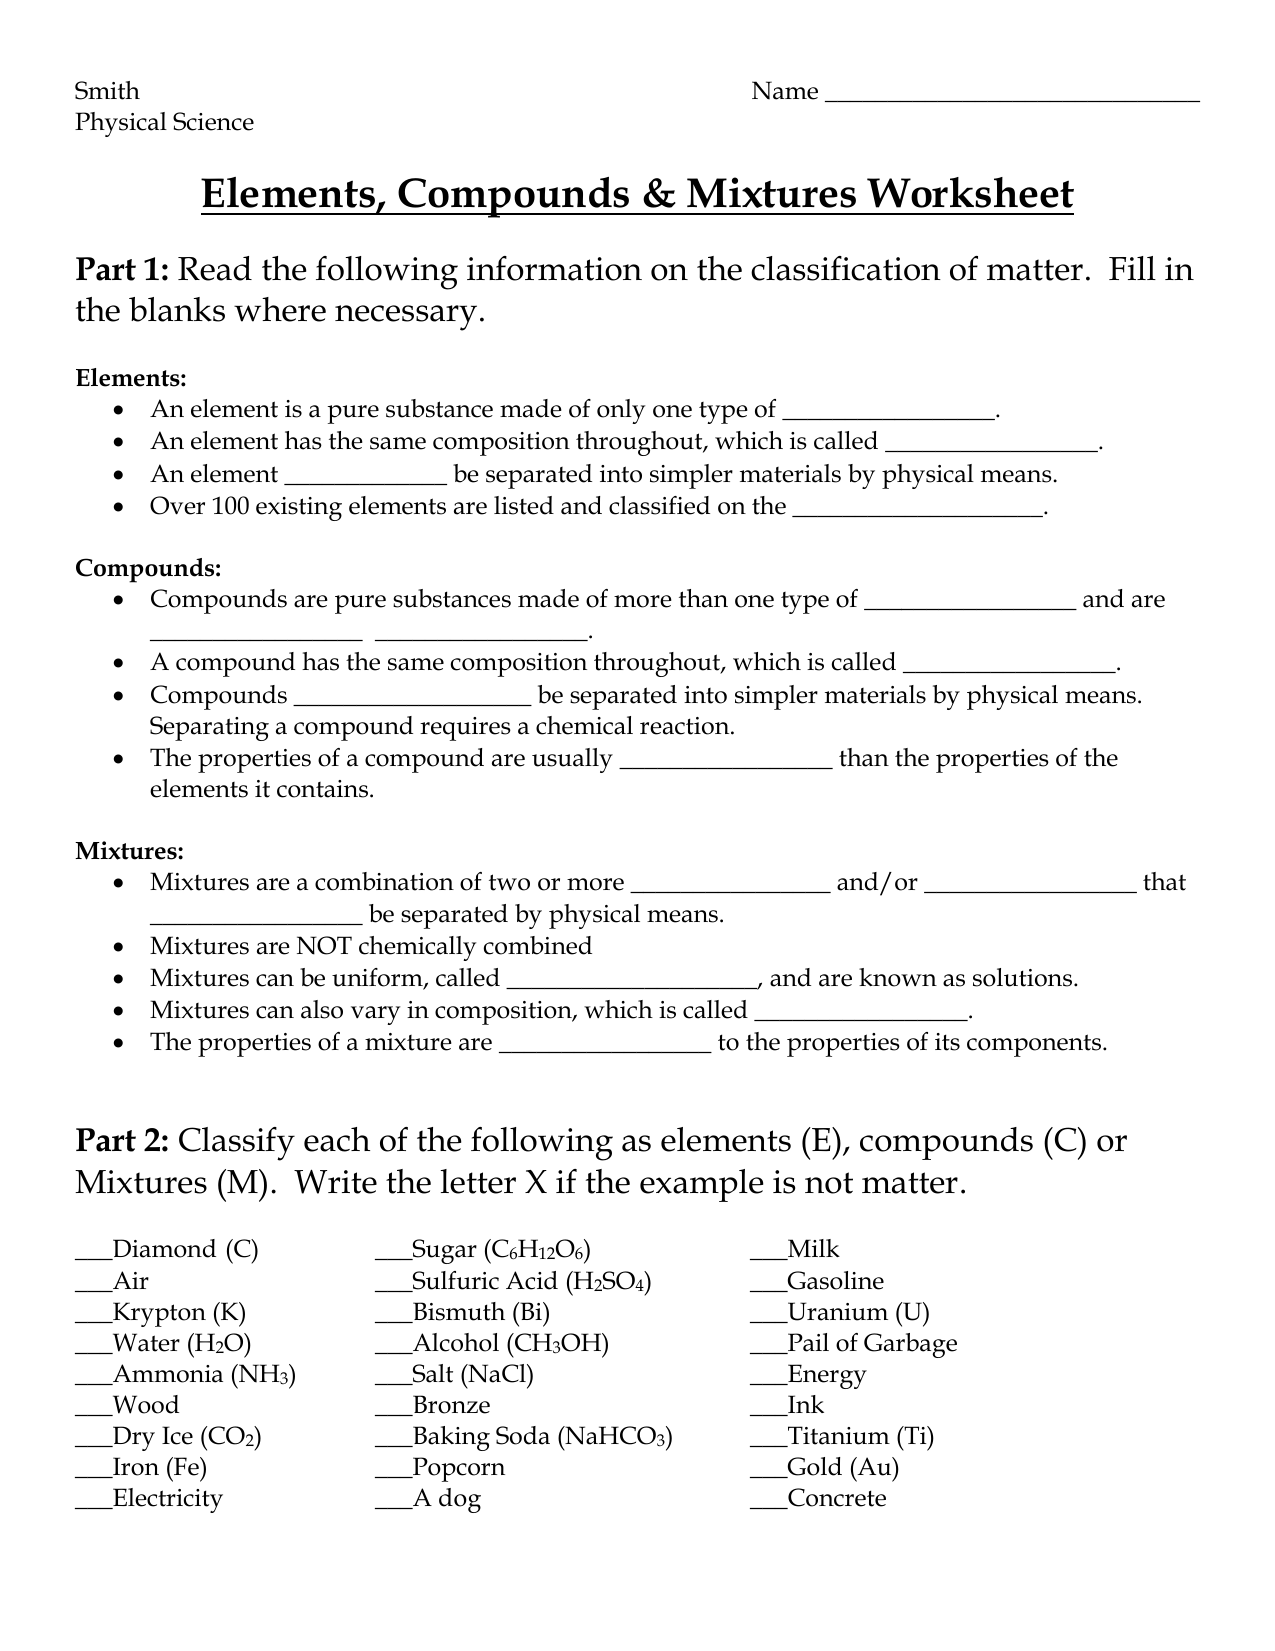 Elements, Compounds & Mixtures Worksheet Inside Elements Compounds Amp Mixtures Worksheet